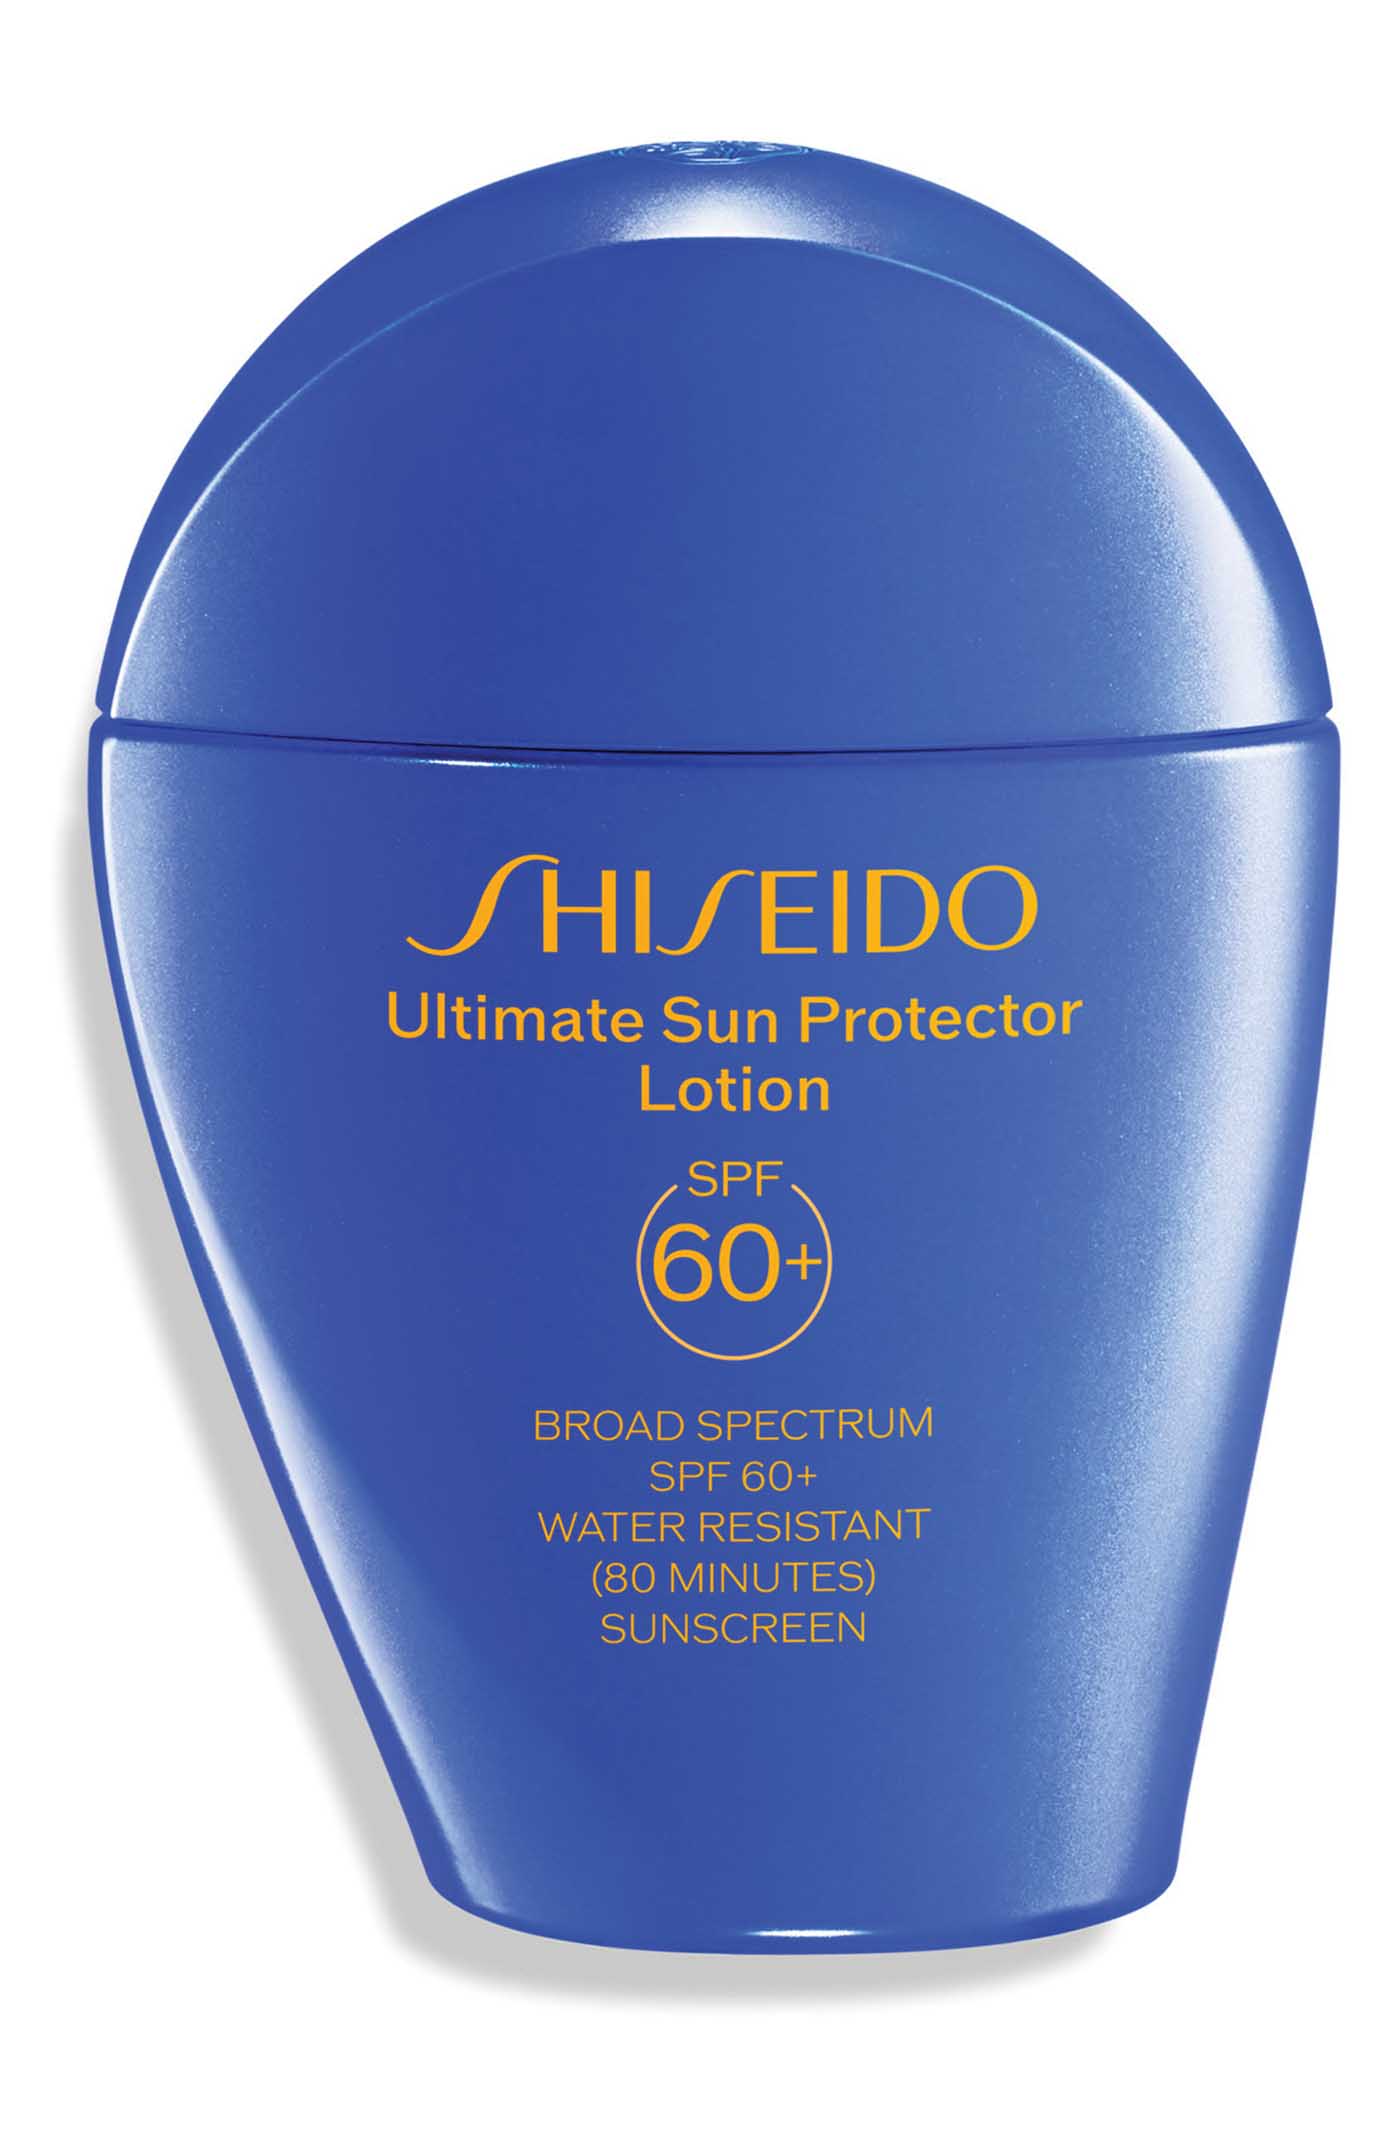 26 Shiseido, Ultimate Sun Protector Lotion Spf 60+ Sunscreen, Nordstrom.com